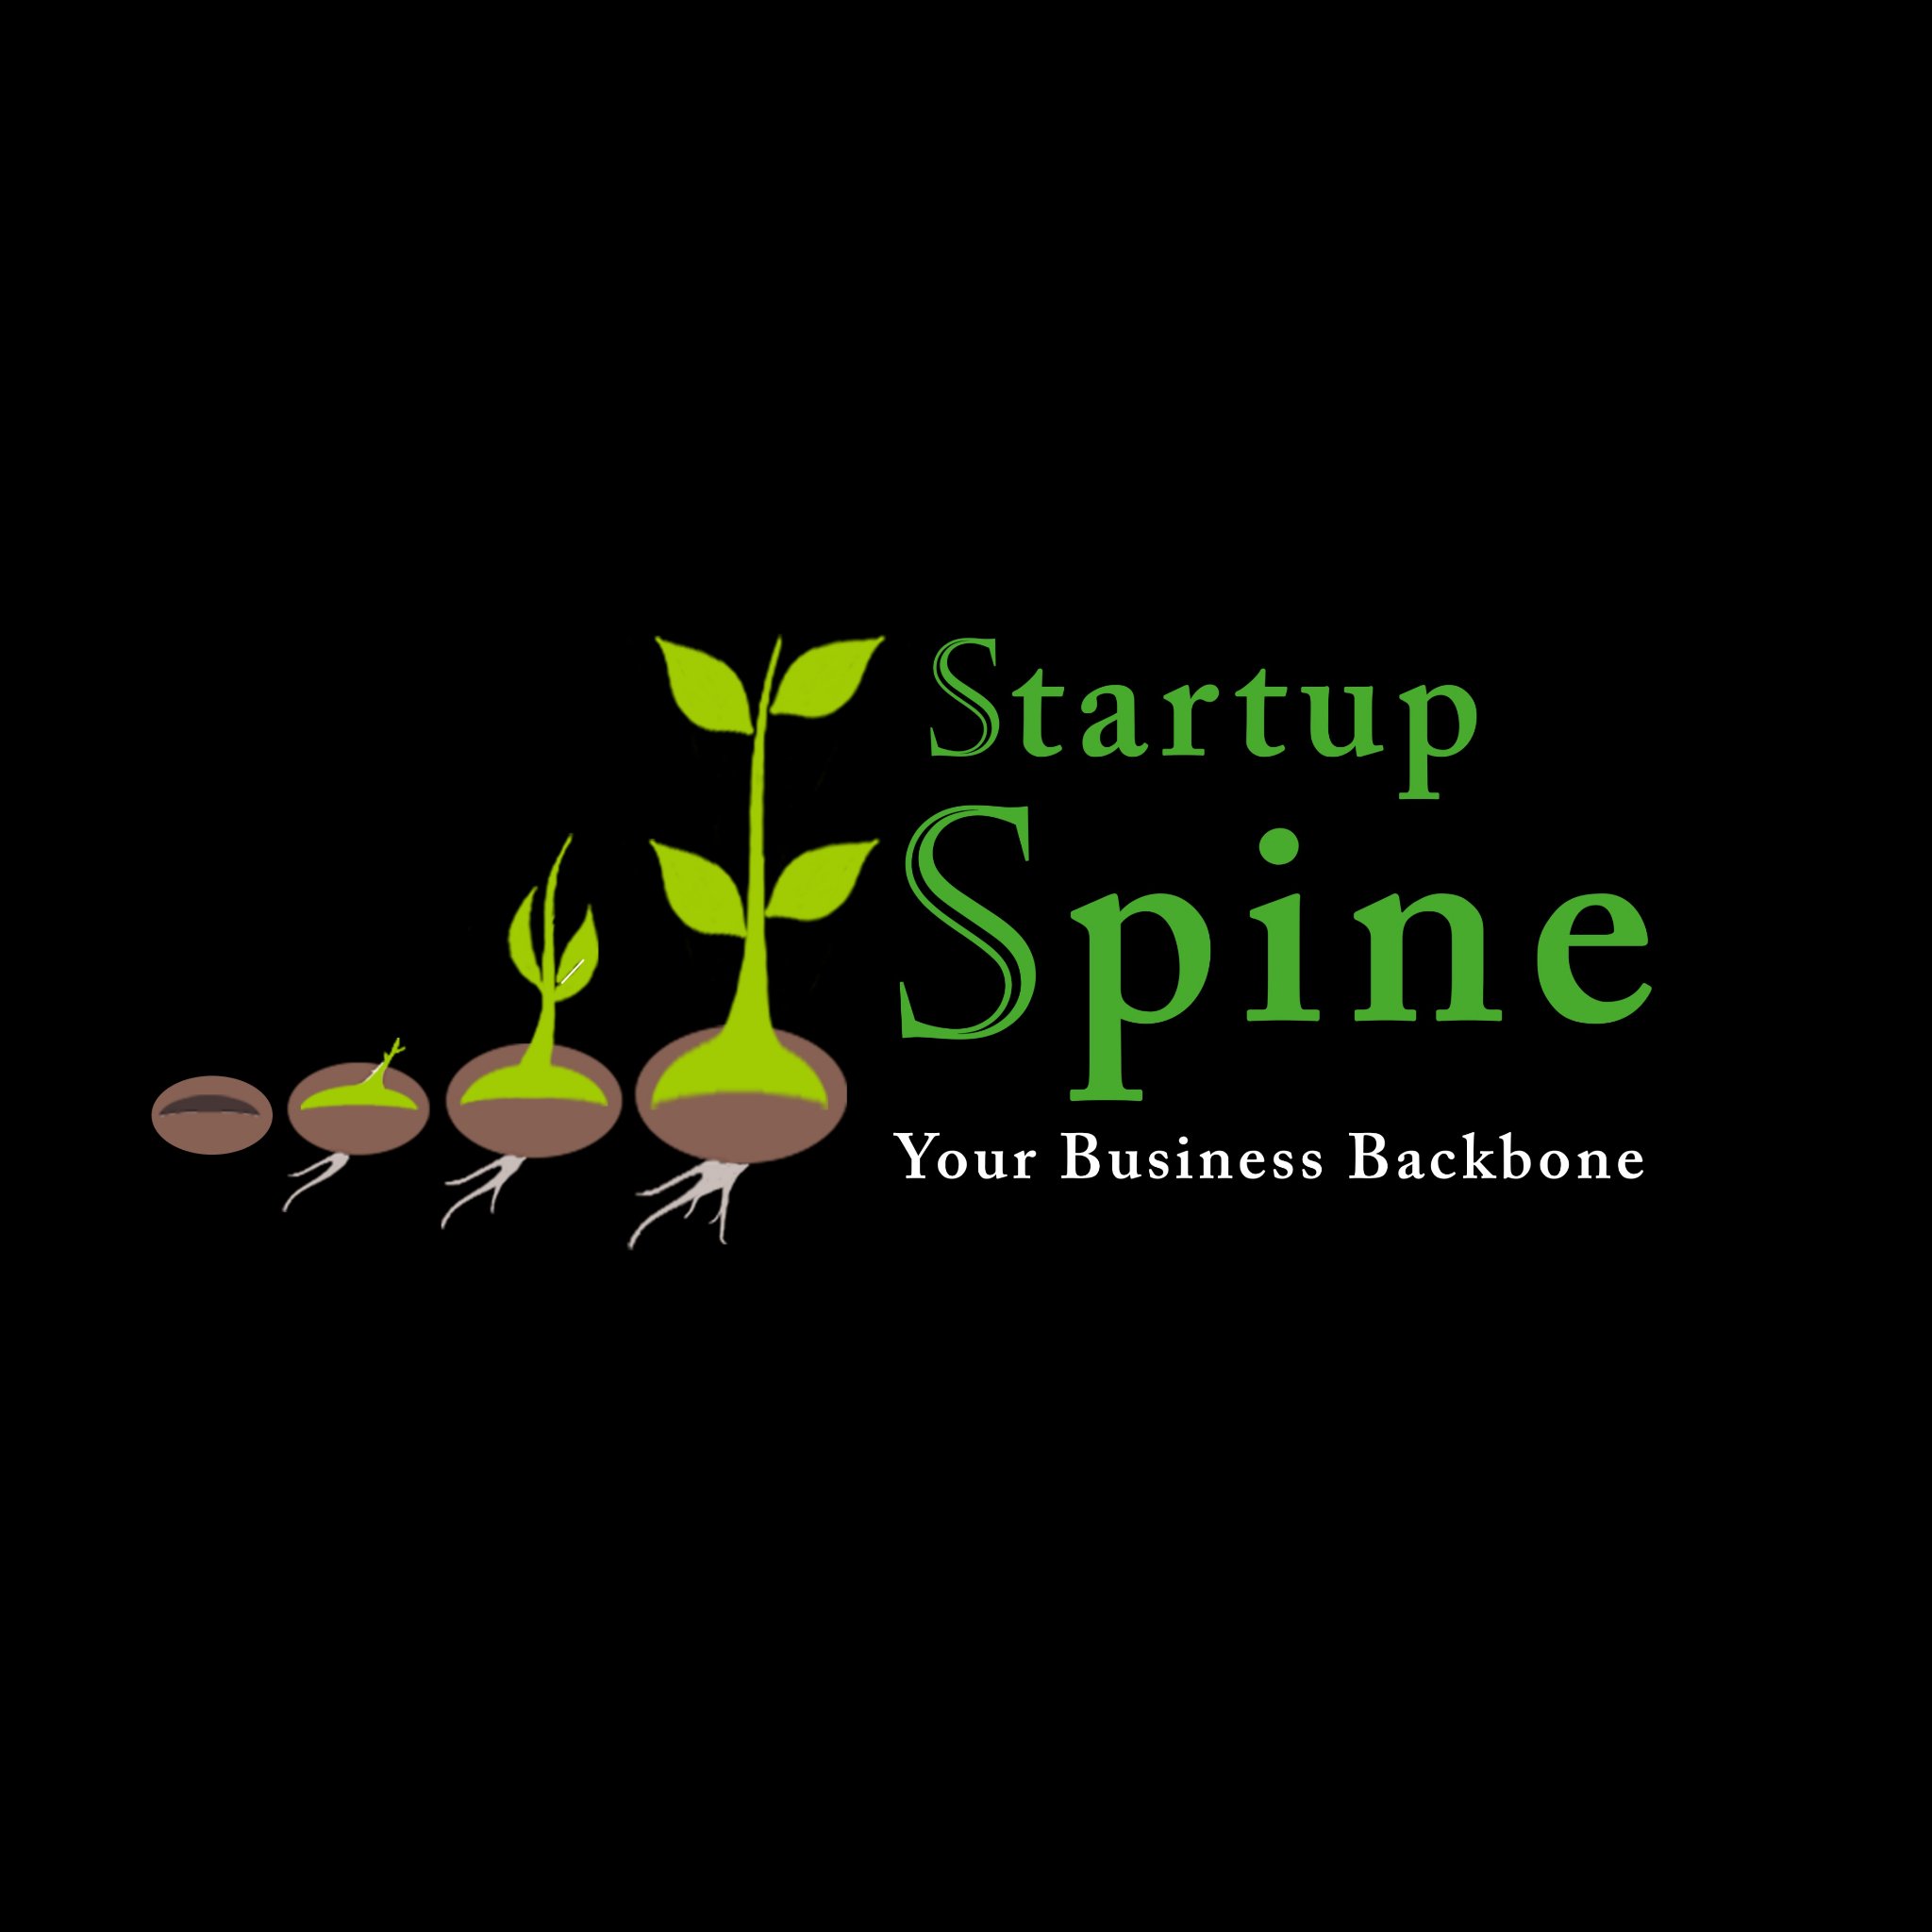 Startup Spine